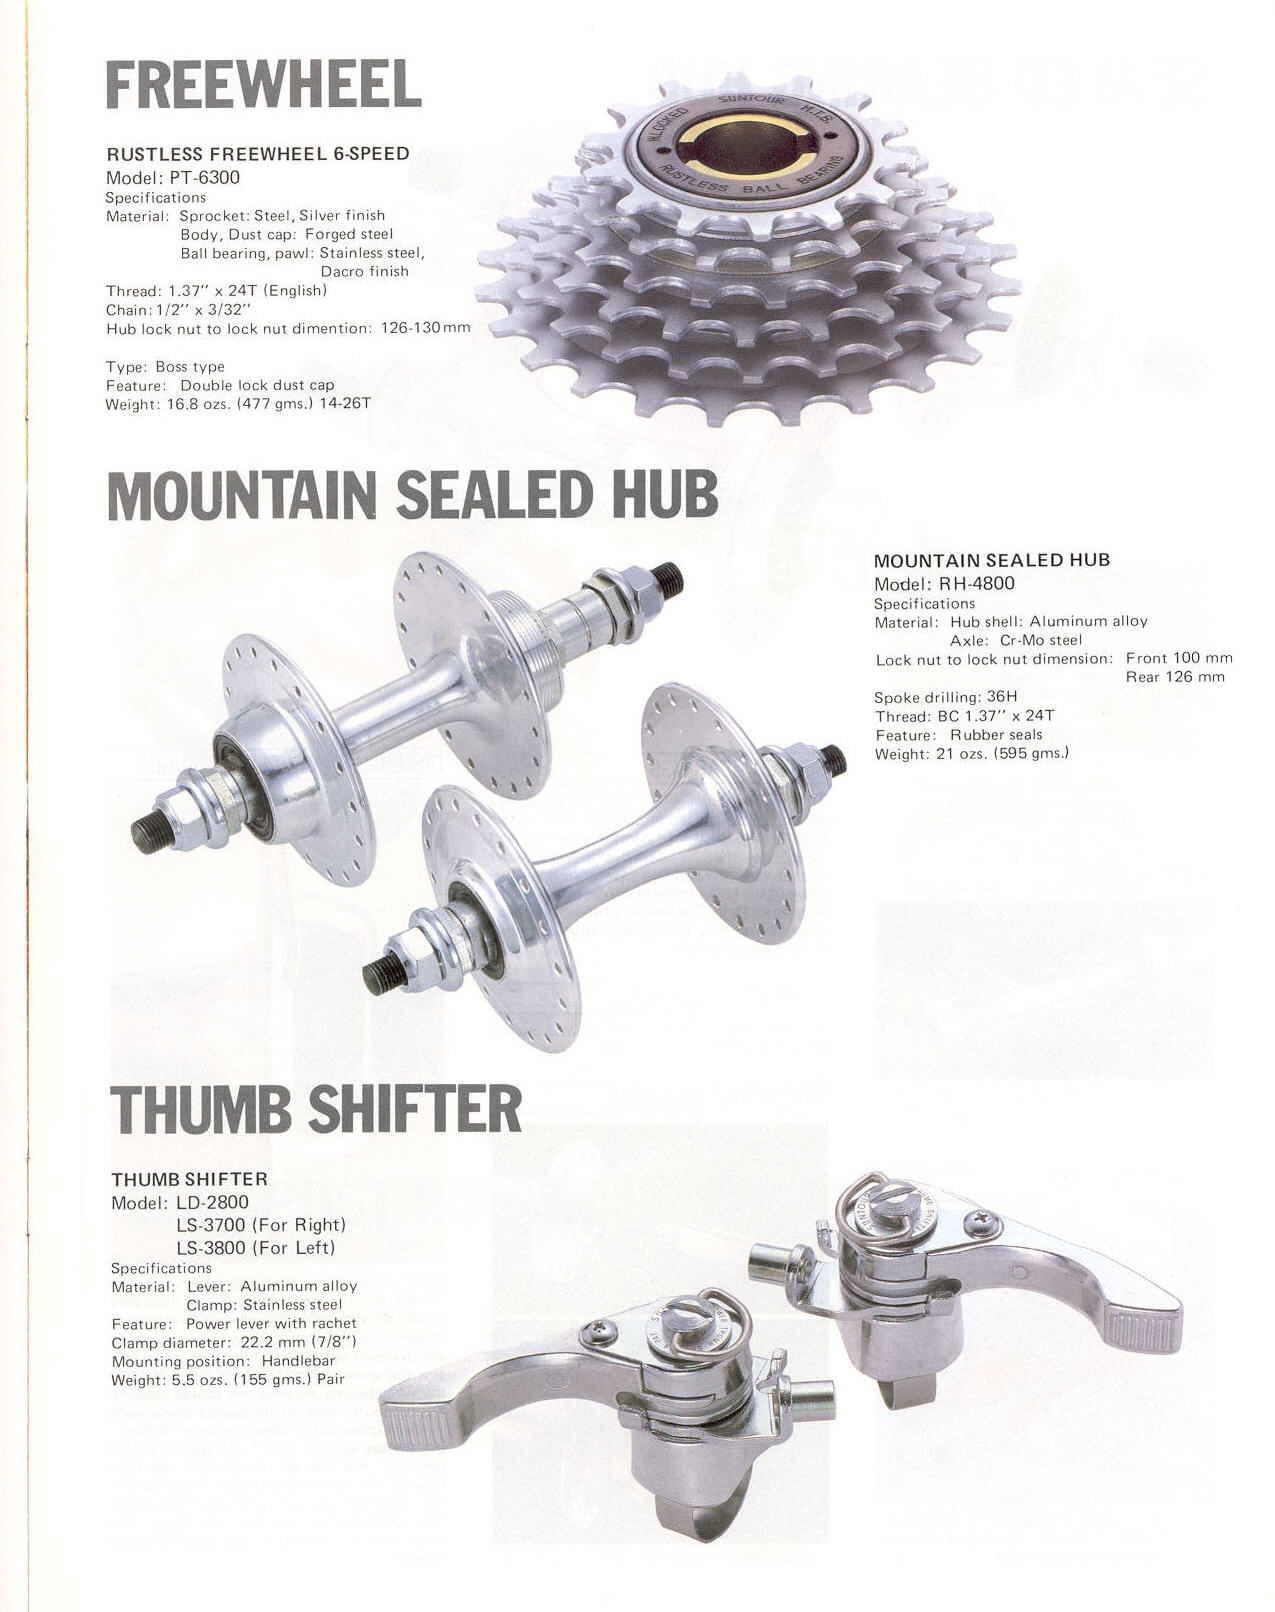 SunTour XC catalog (10-1984)